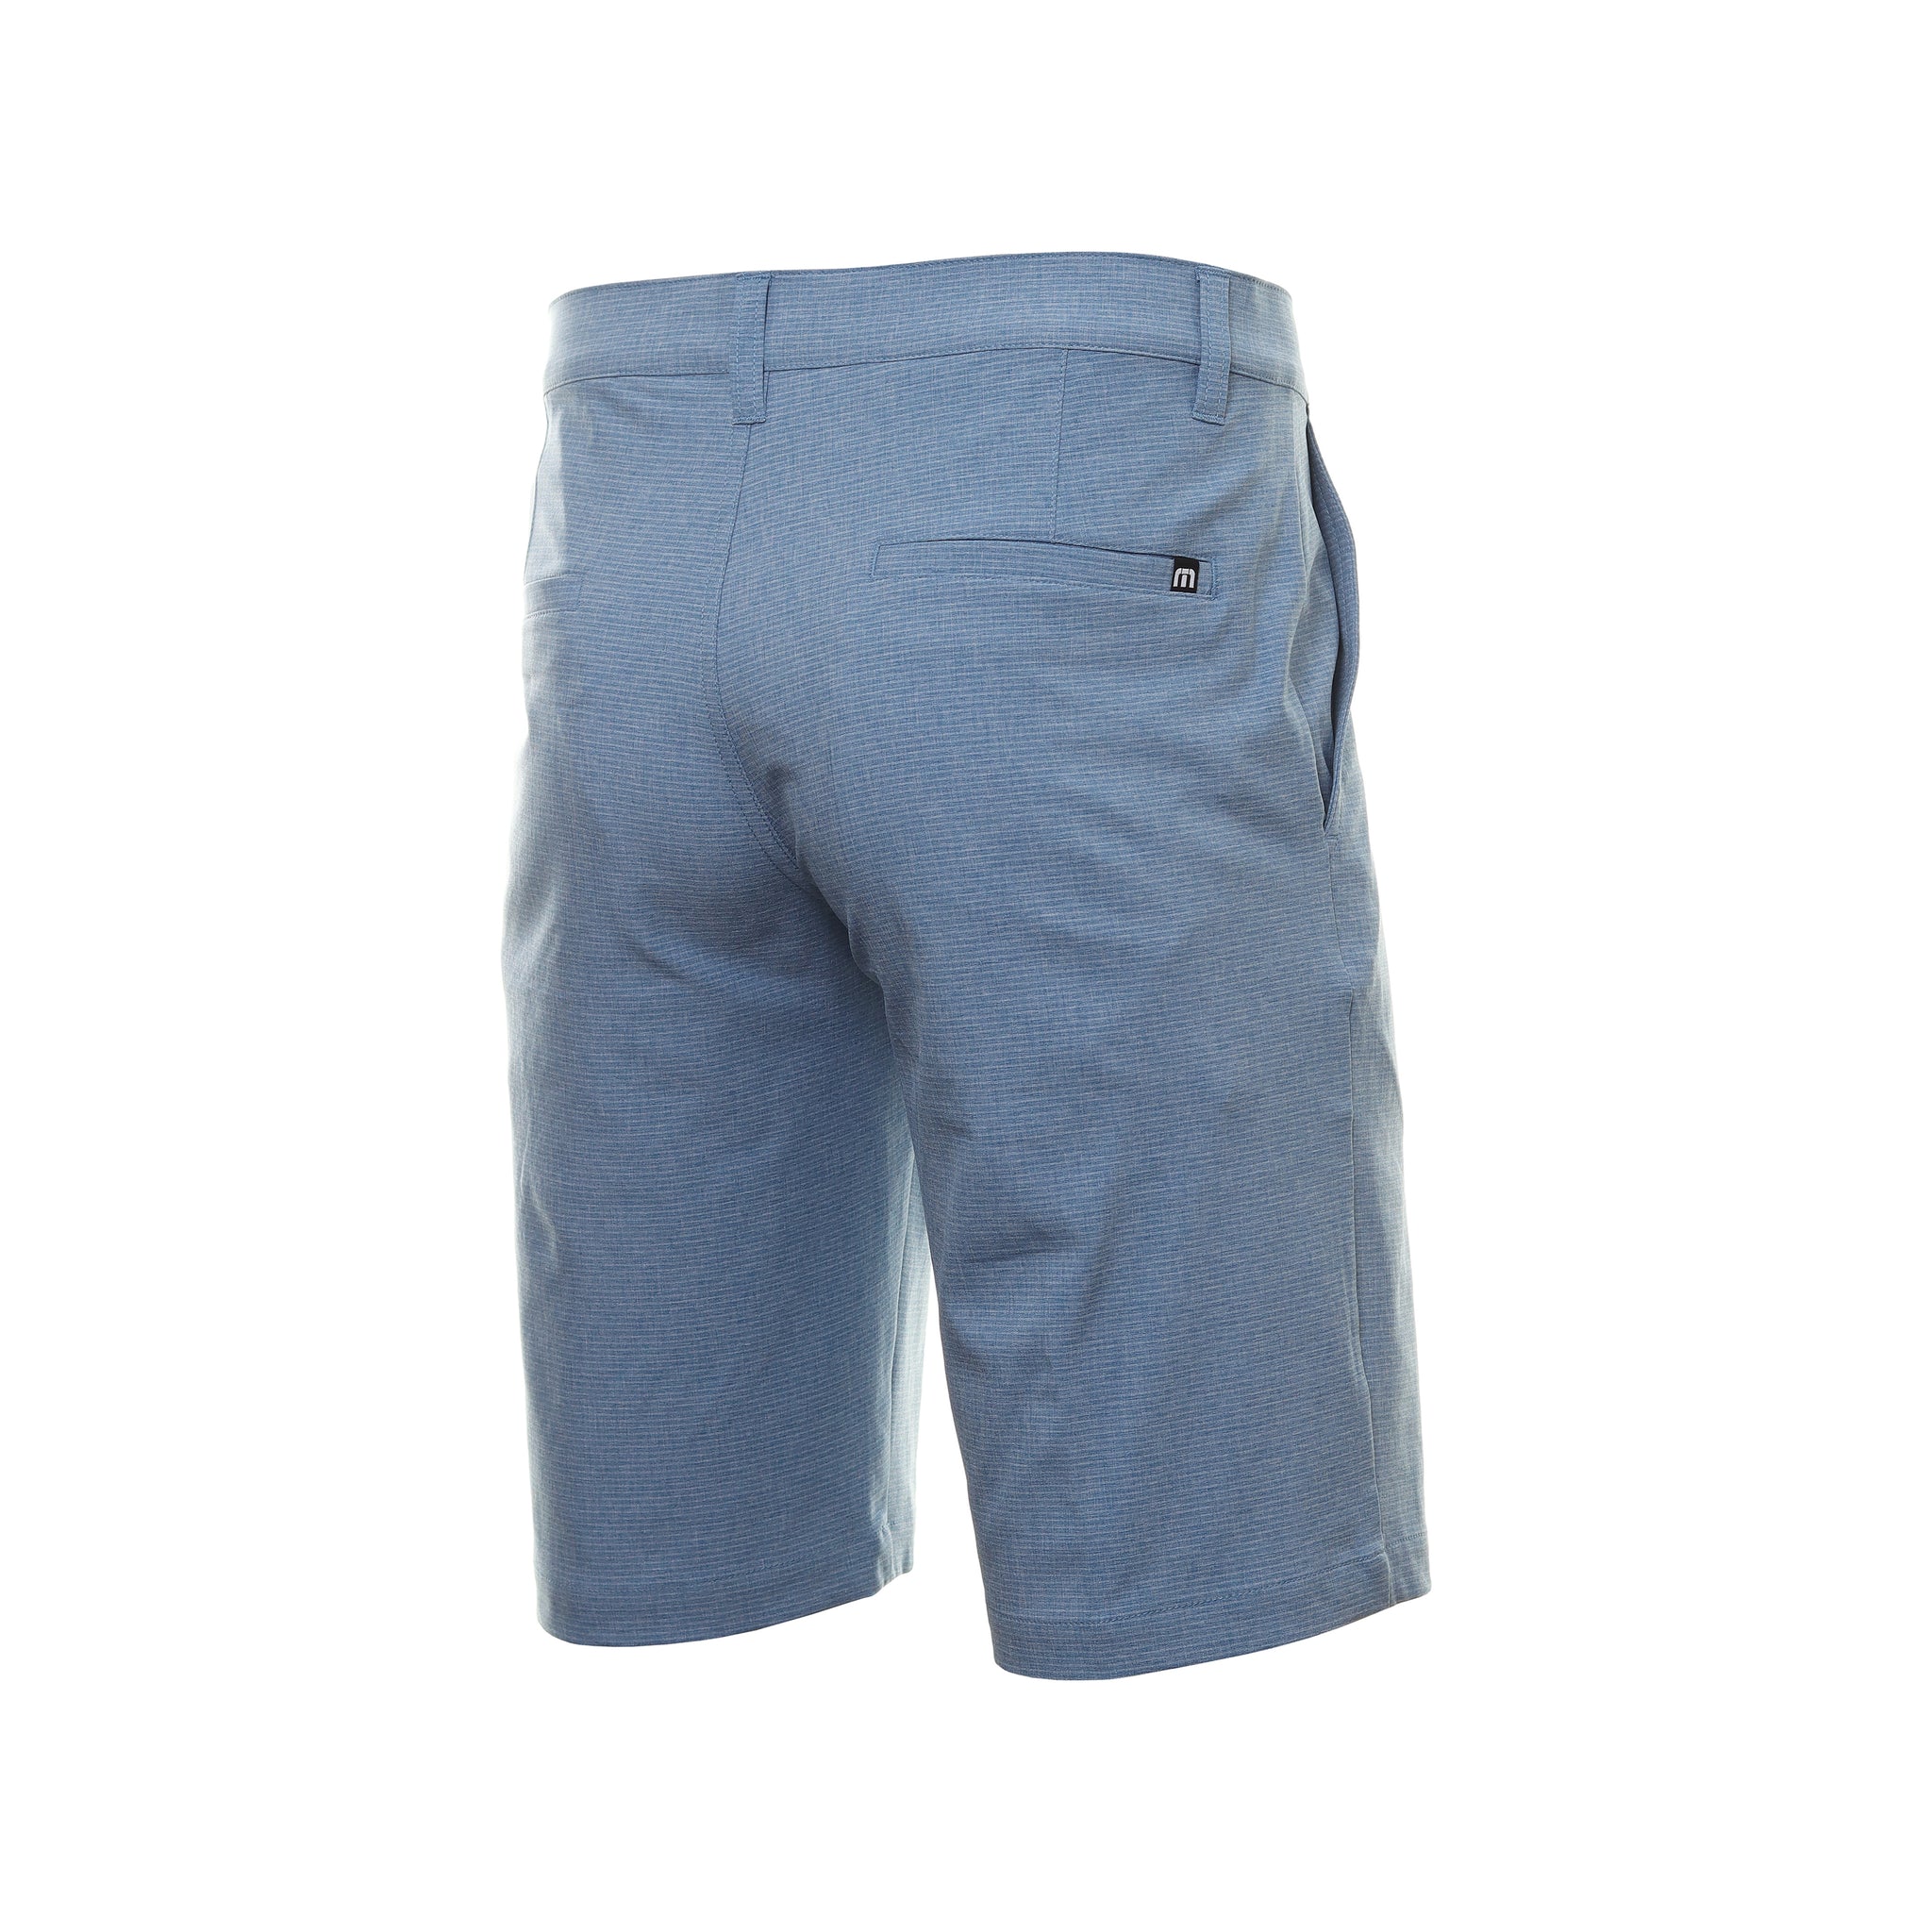 travismathew-sand-harbour-shorts-1mw397-heather-blue